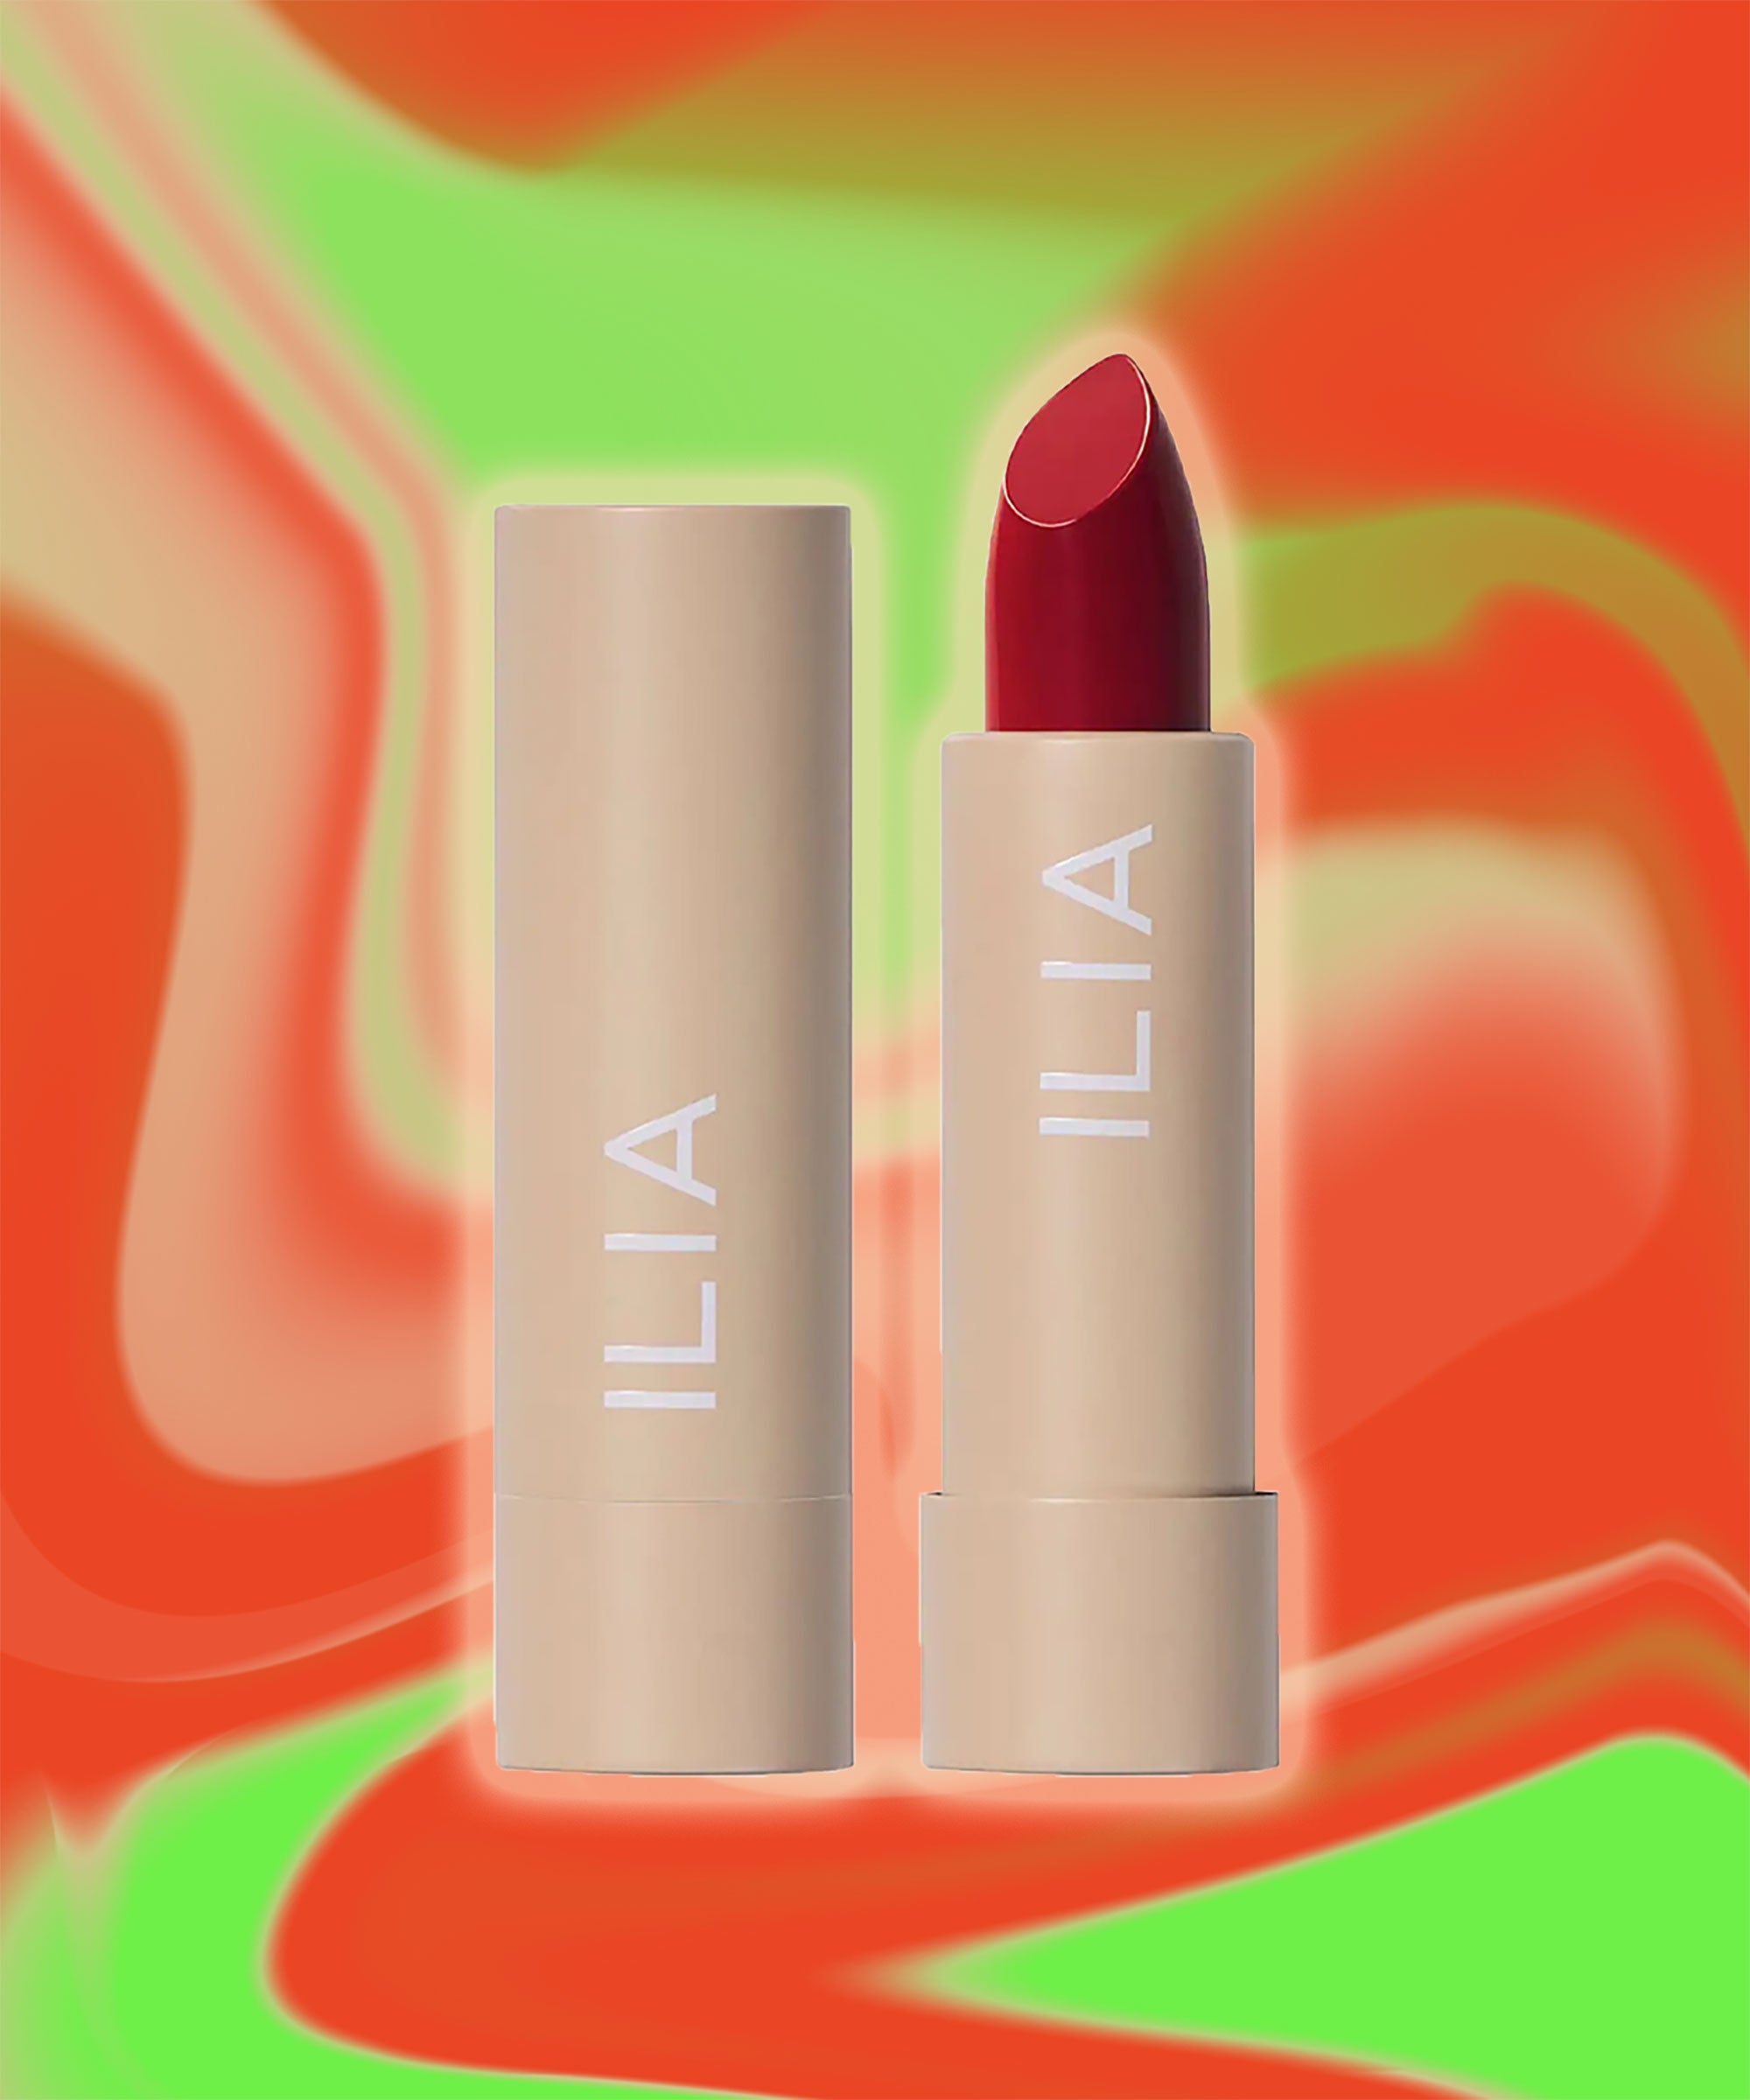 The 12 Best Dark Red Lipsticks That Beauty Editors Love